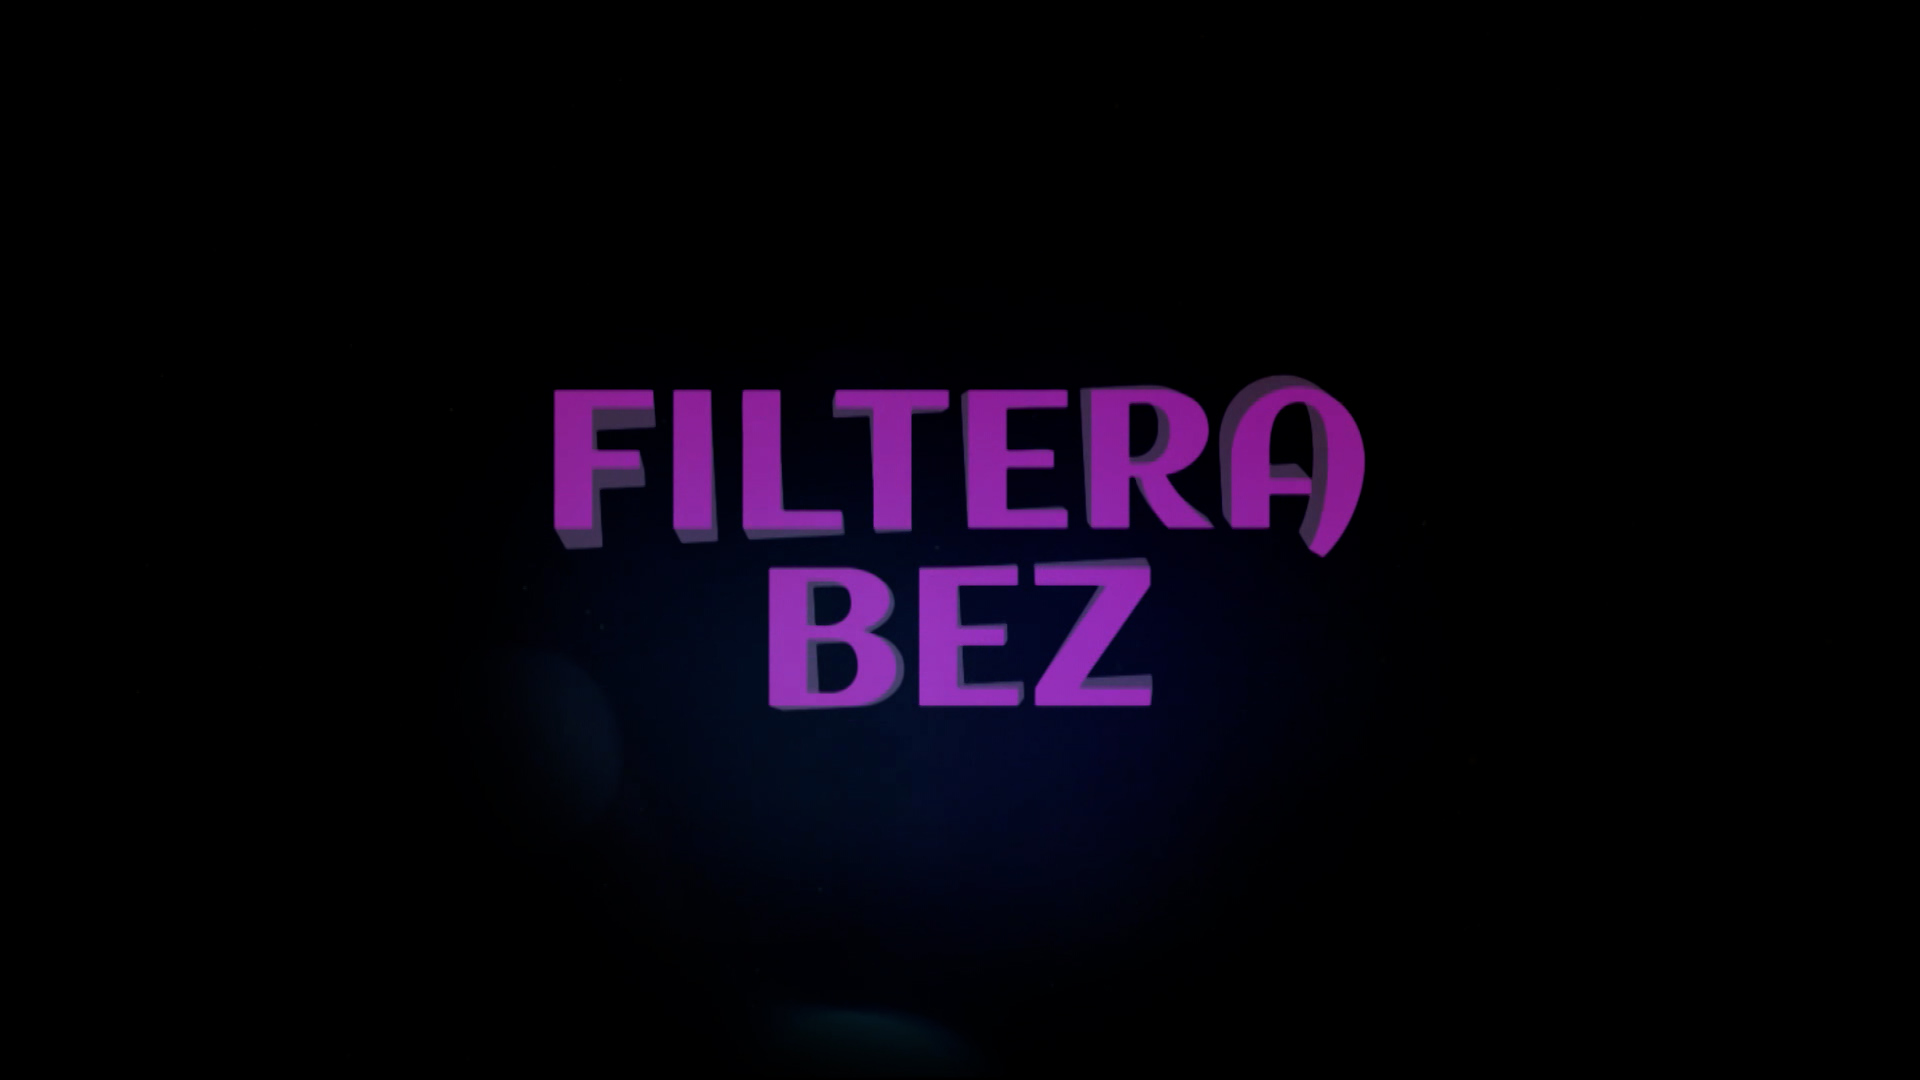 Filtera bez